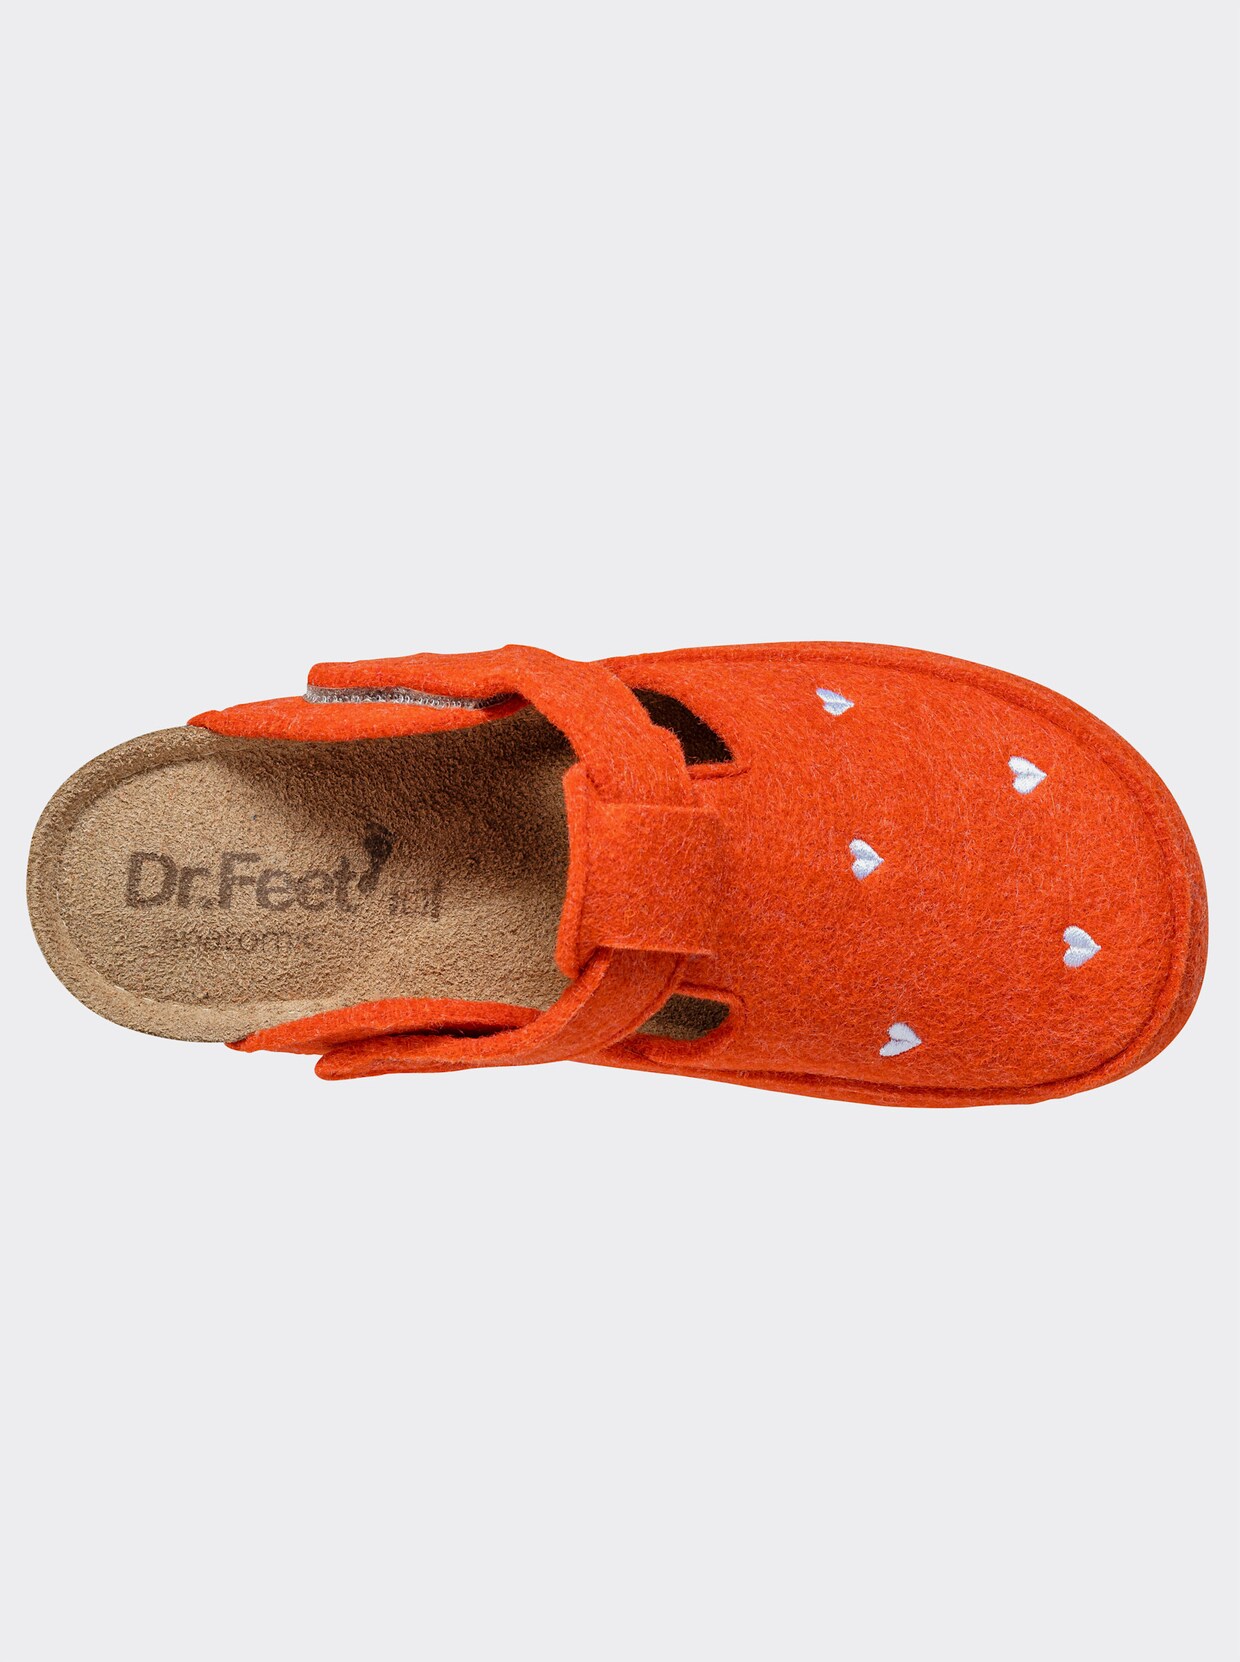 Dr. Feet Chaussons - orange